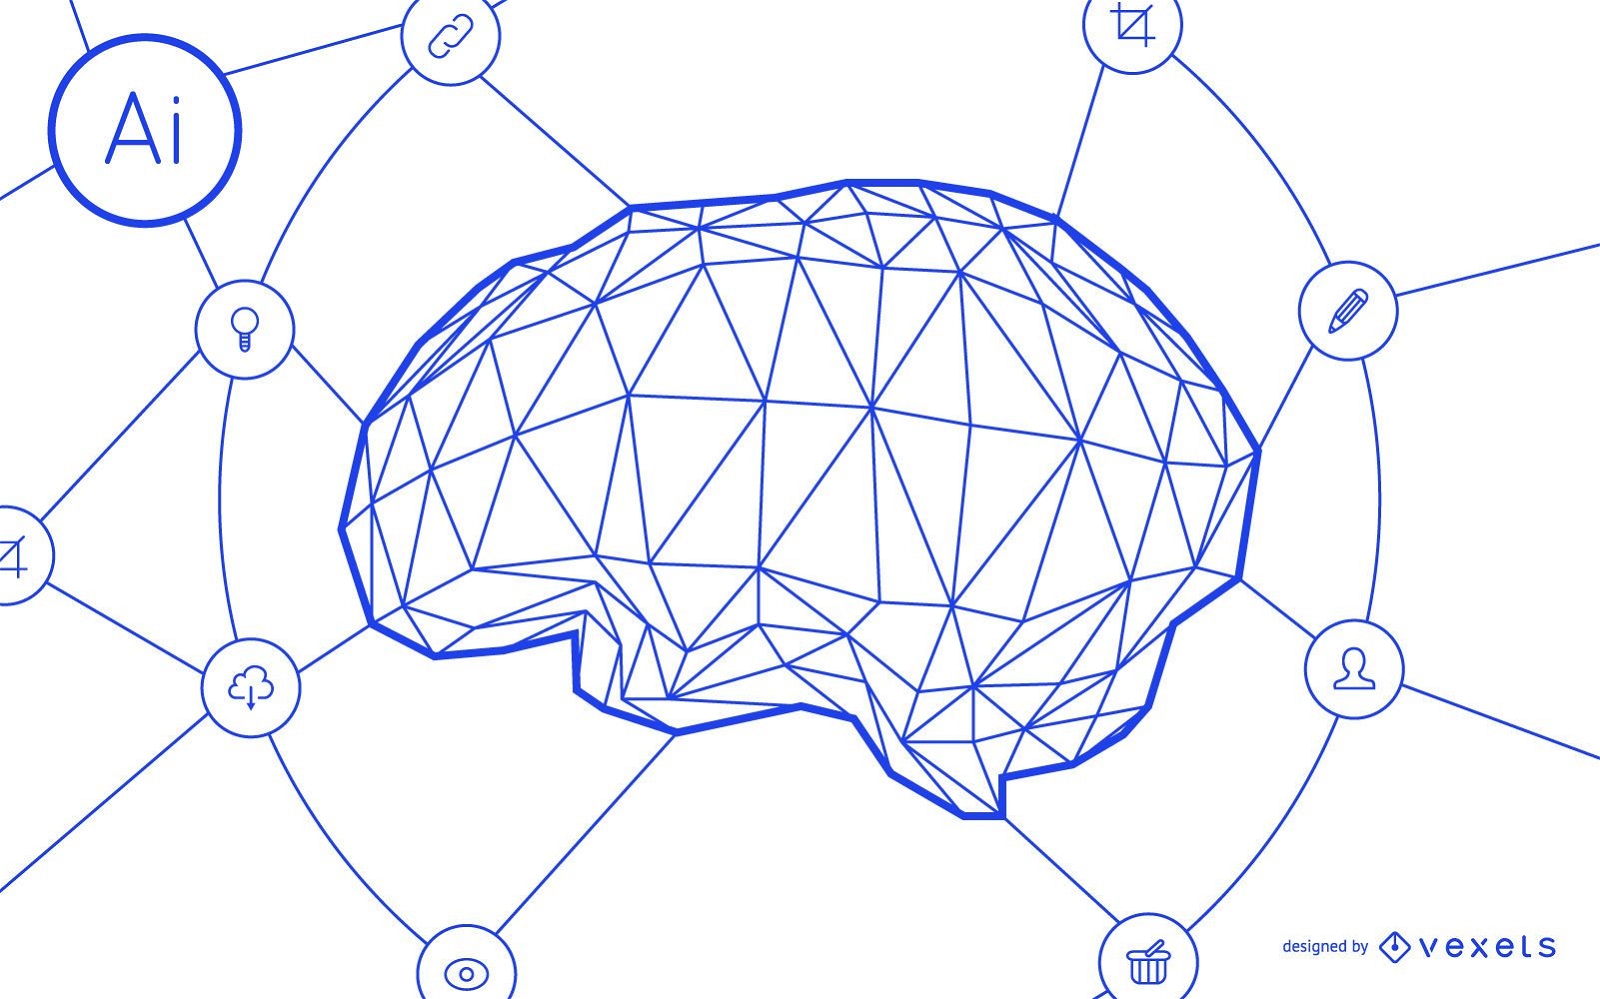 Projeto de rede cerebral de inteligência artificial